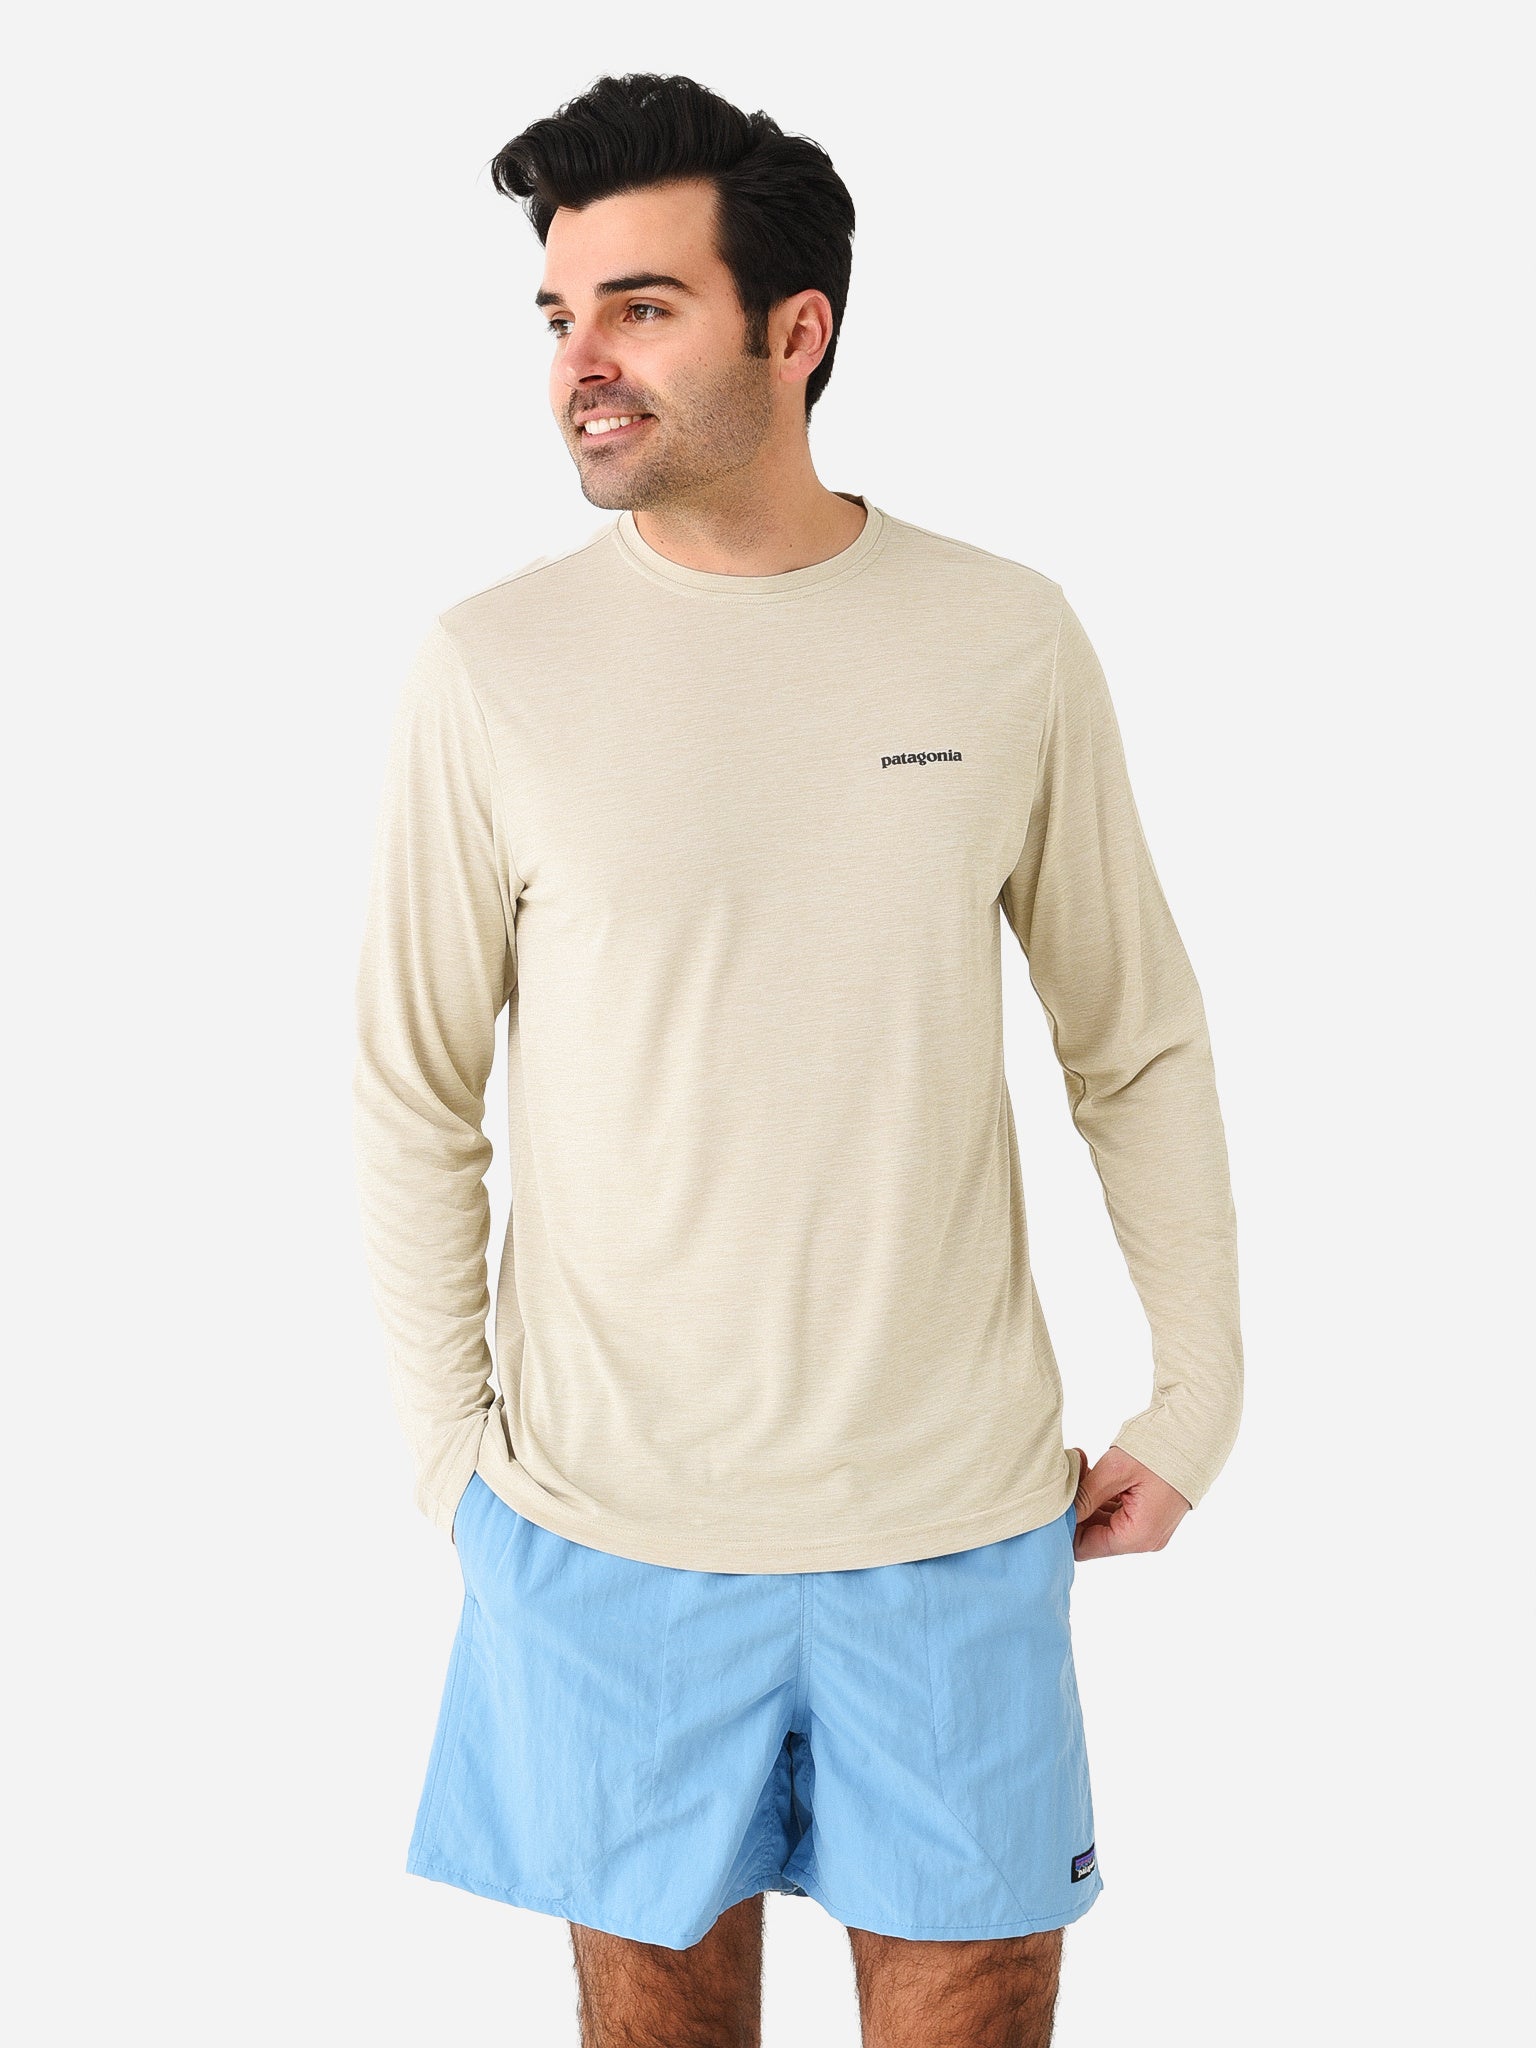 Patagonia Men Long Sleeve Fishing Shirts & Tops for sale